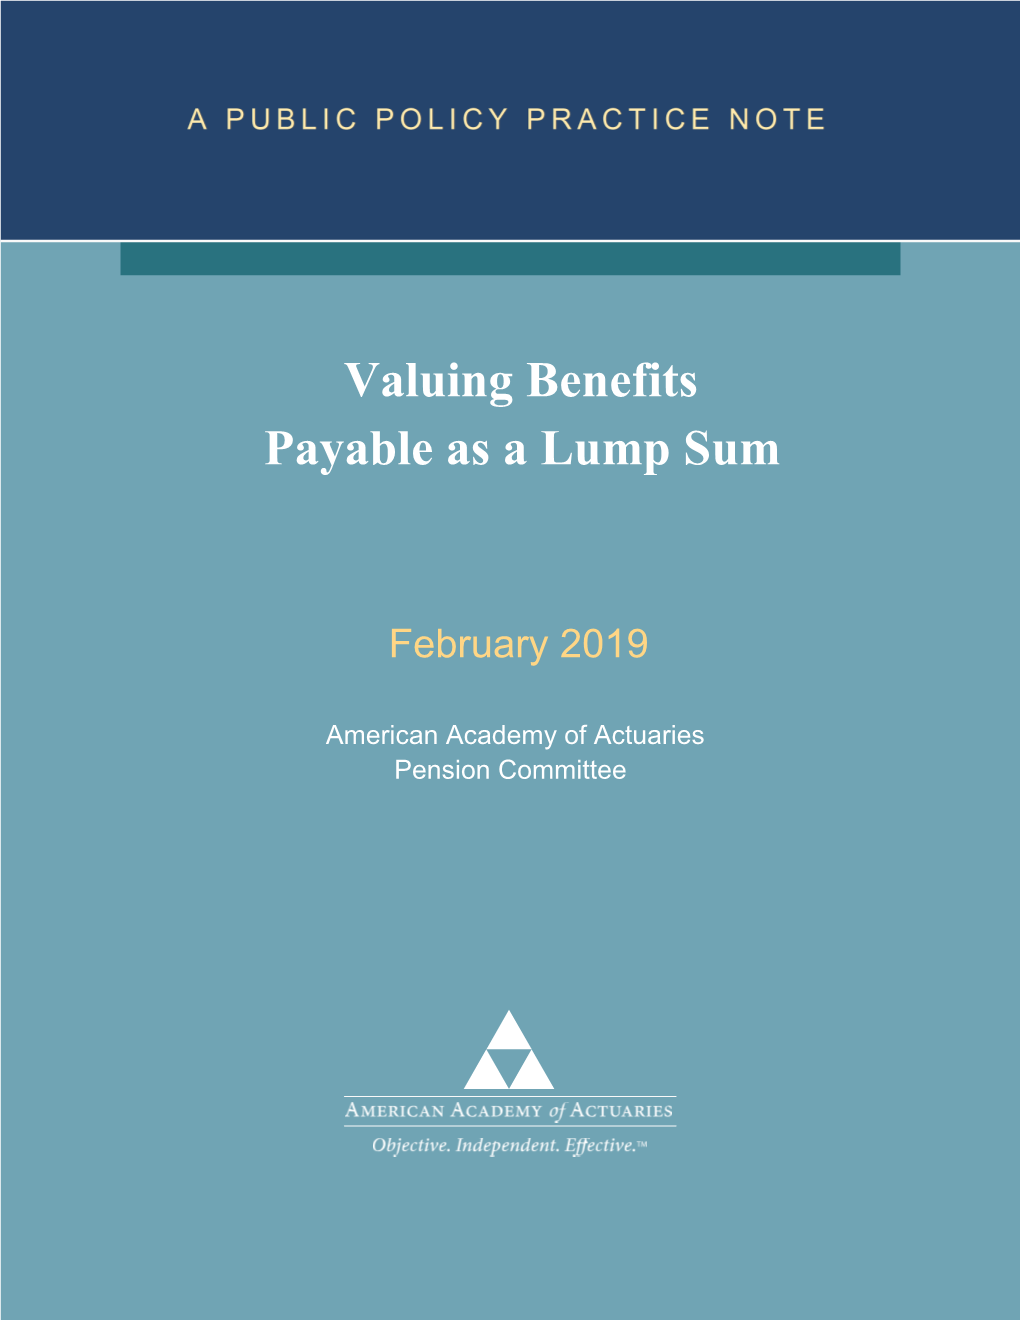 Valuing Benefits Payable As a Lump Sum